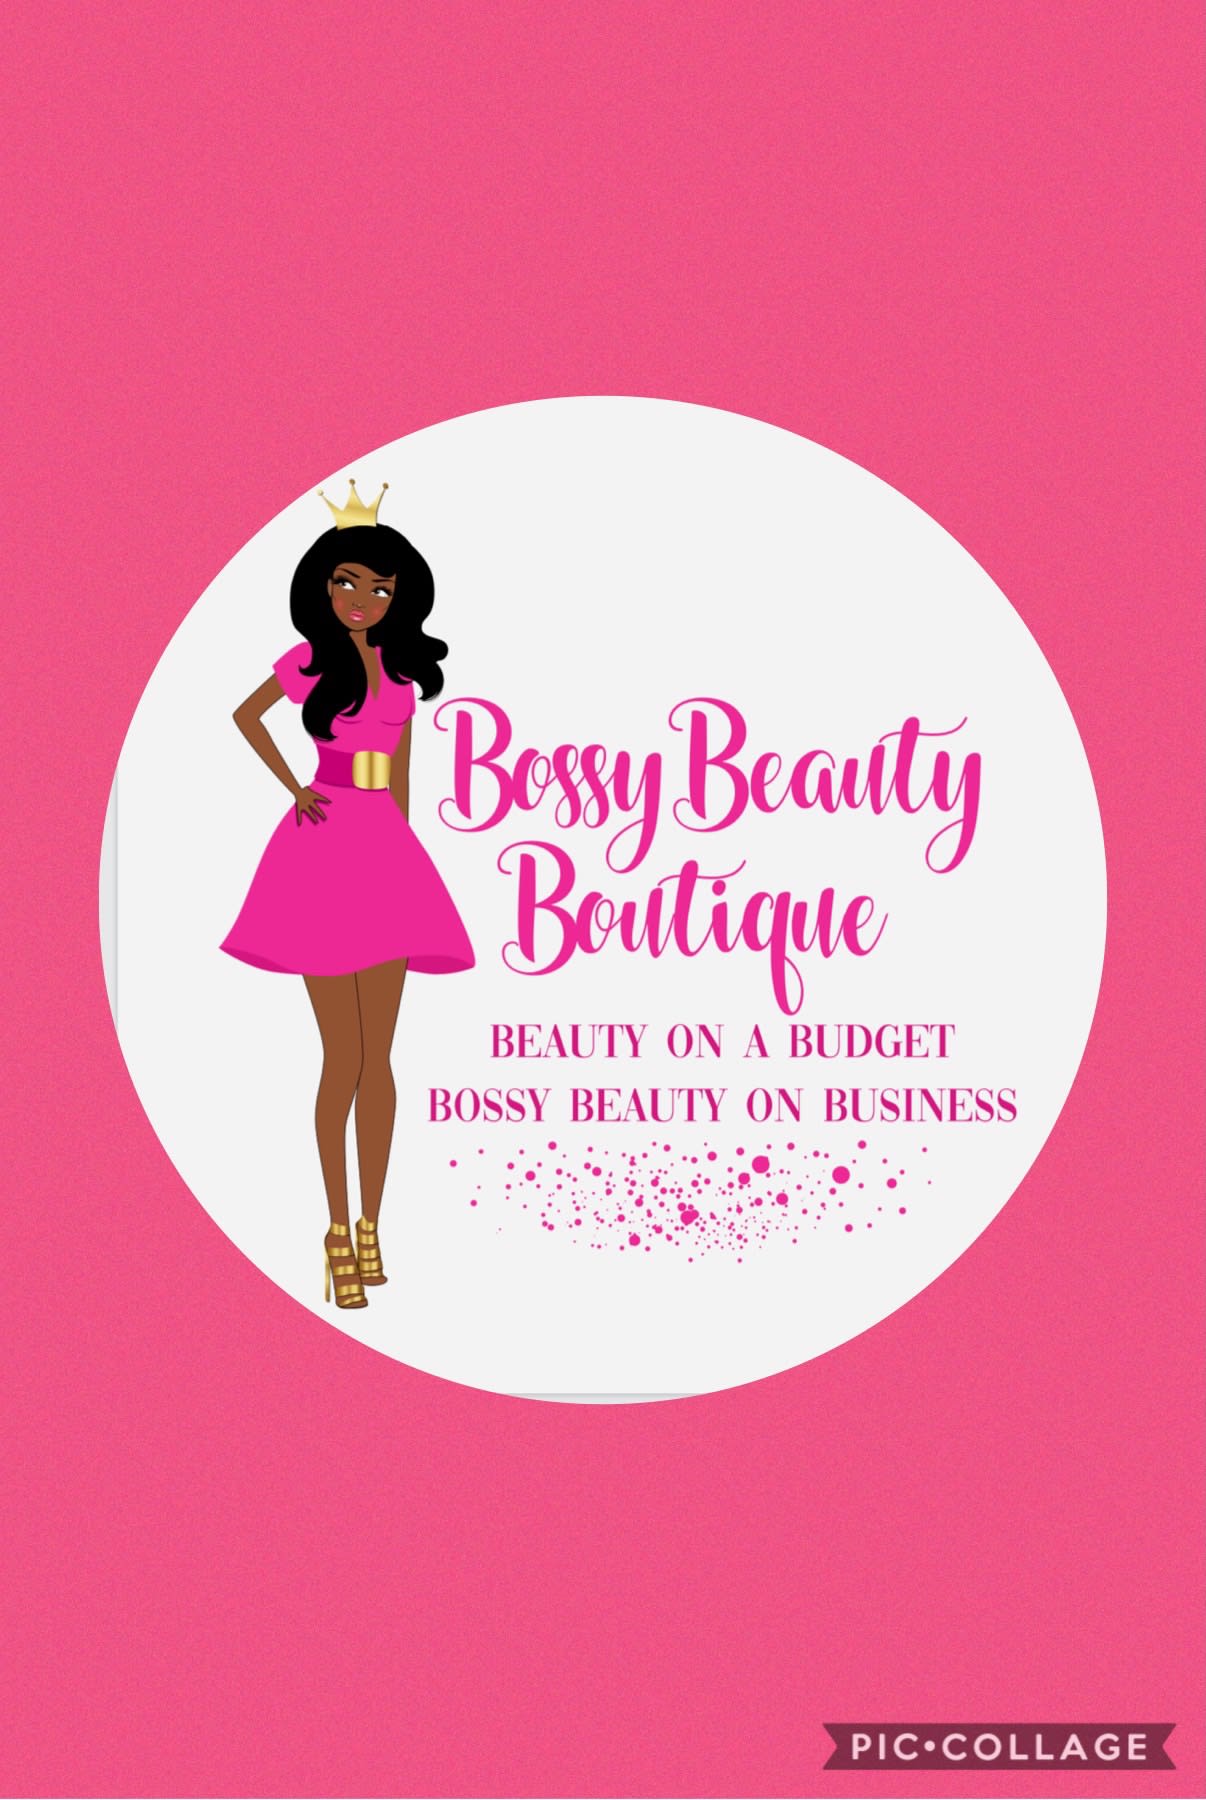 Bossy Beauty Boutique